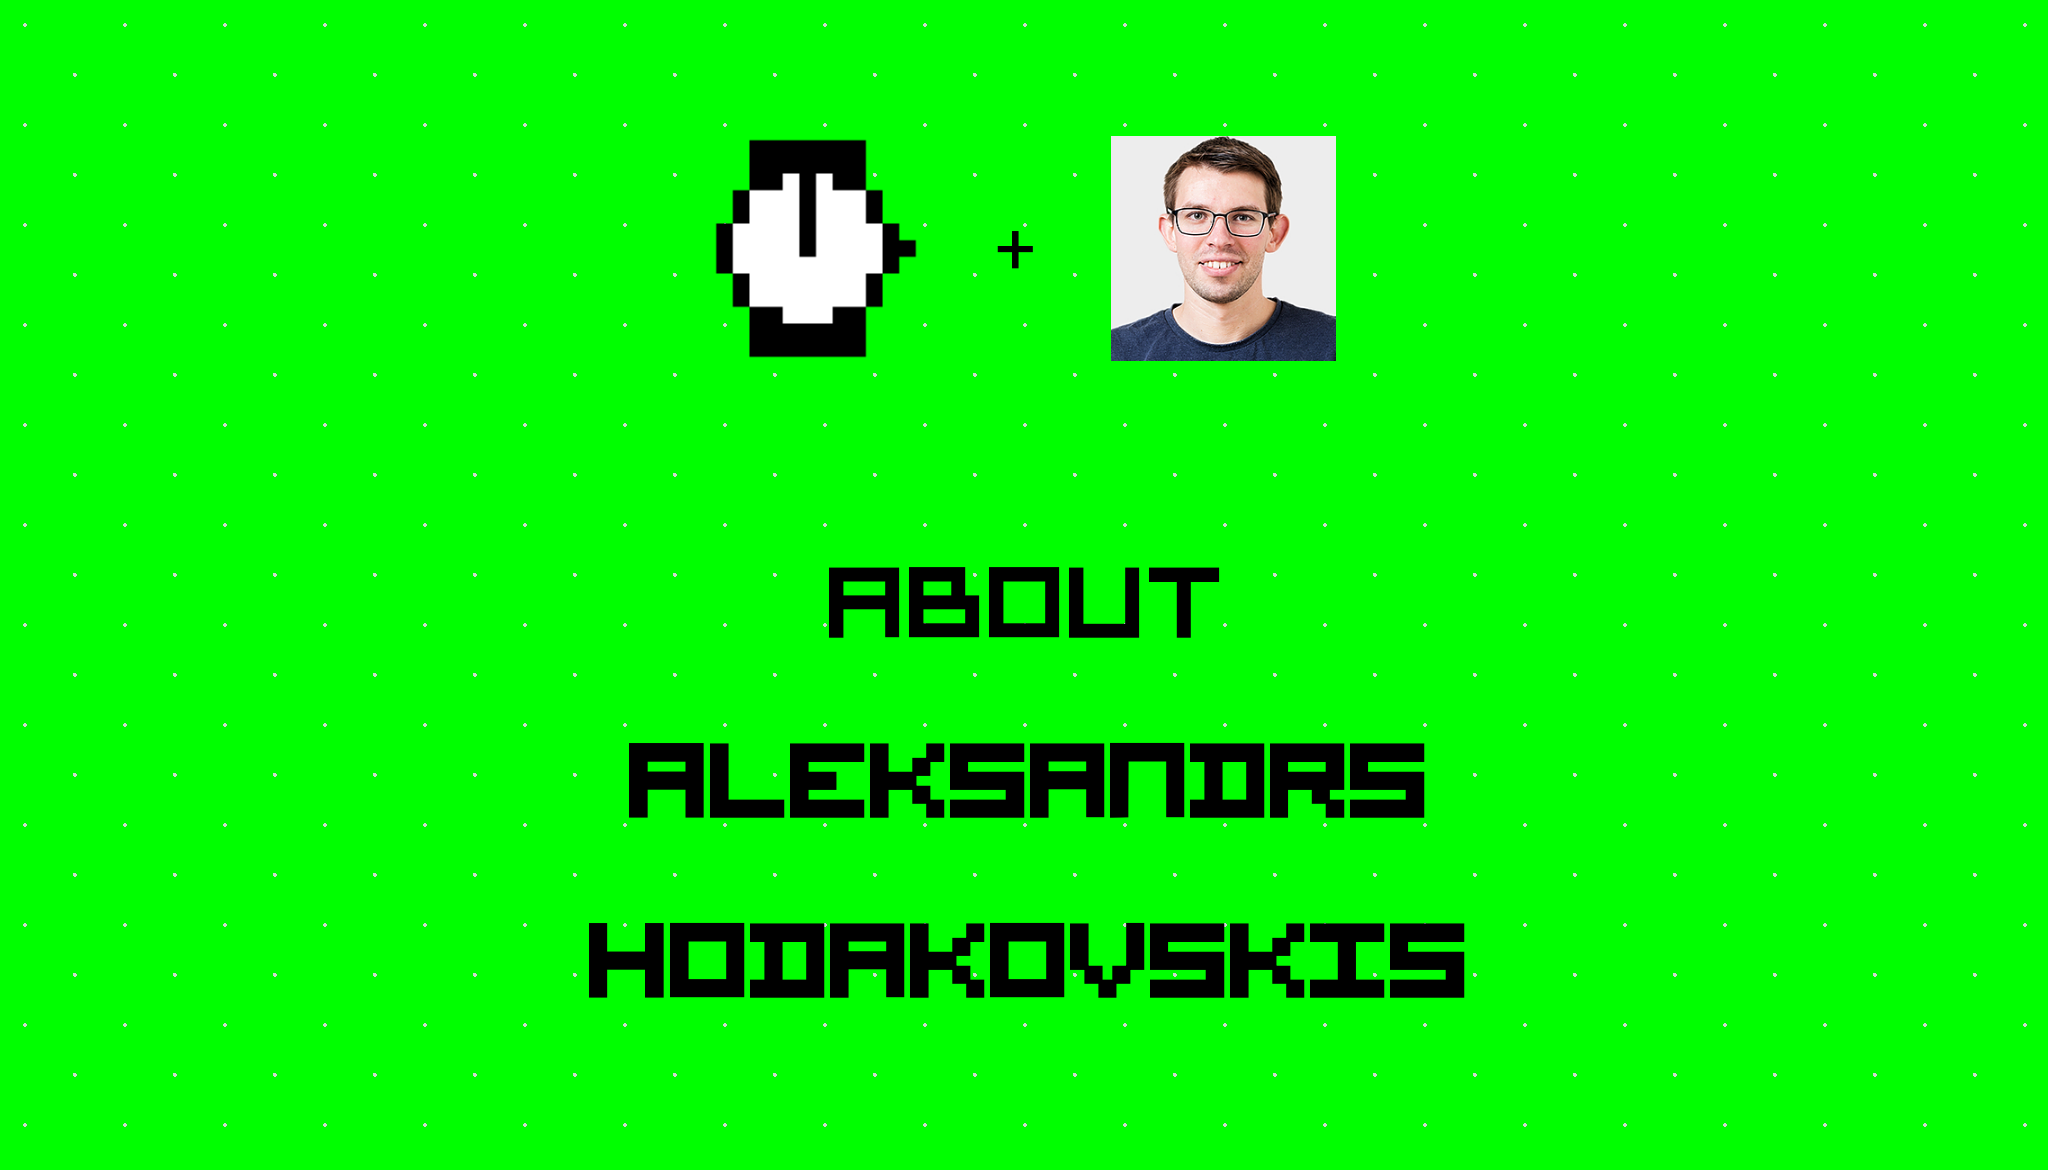 about-aleksandrs-hodakovskis-on-hackernoon